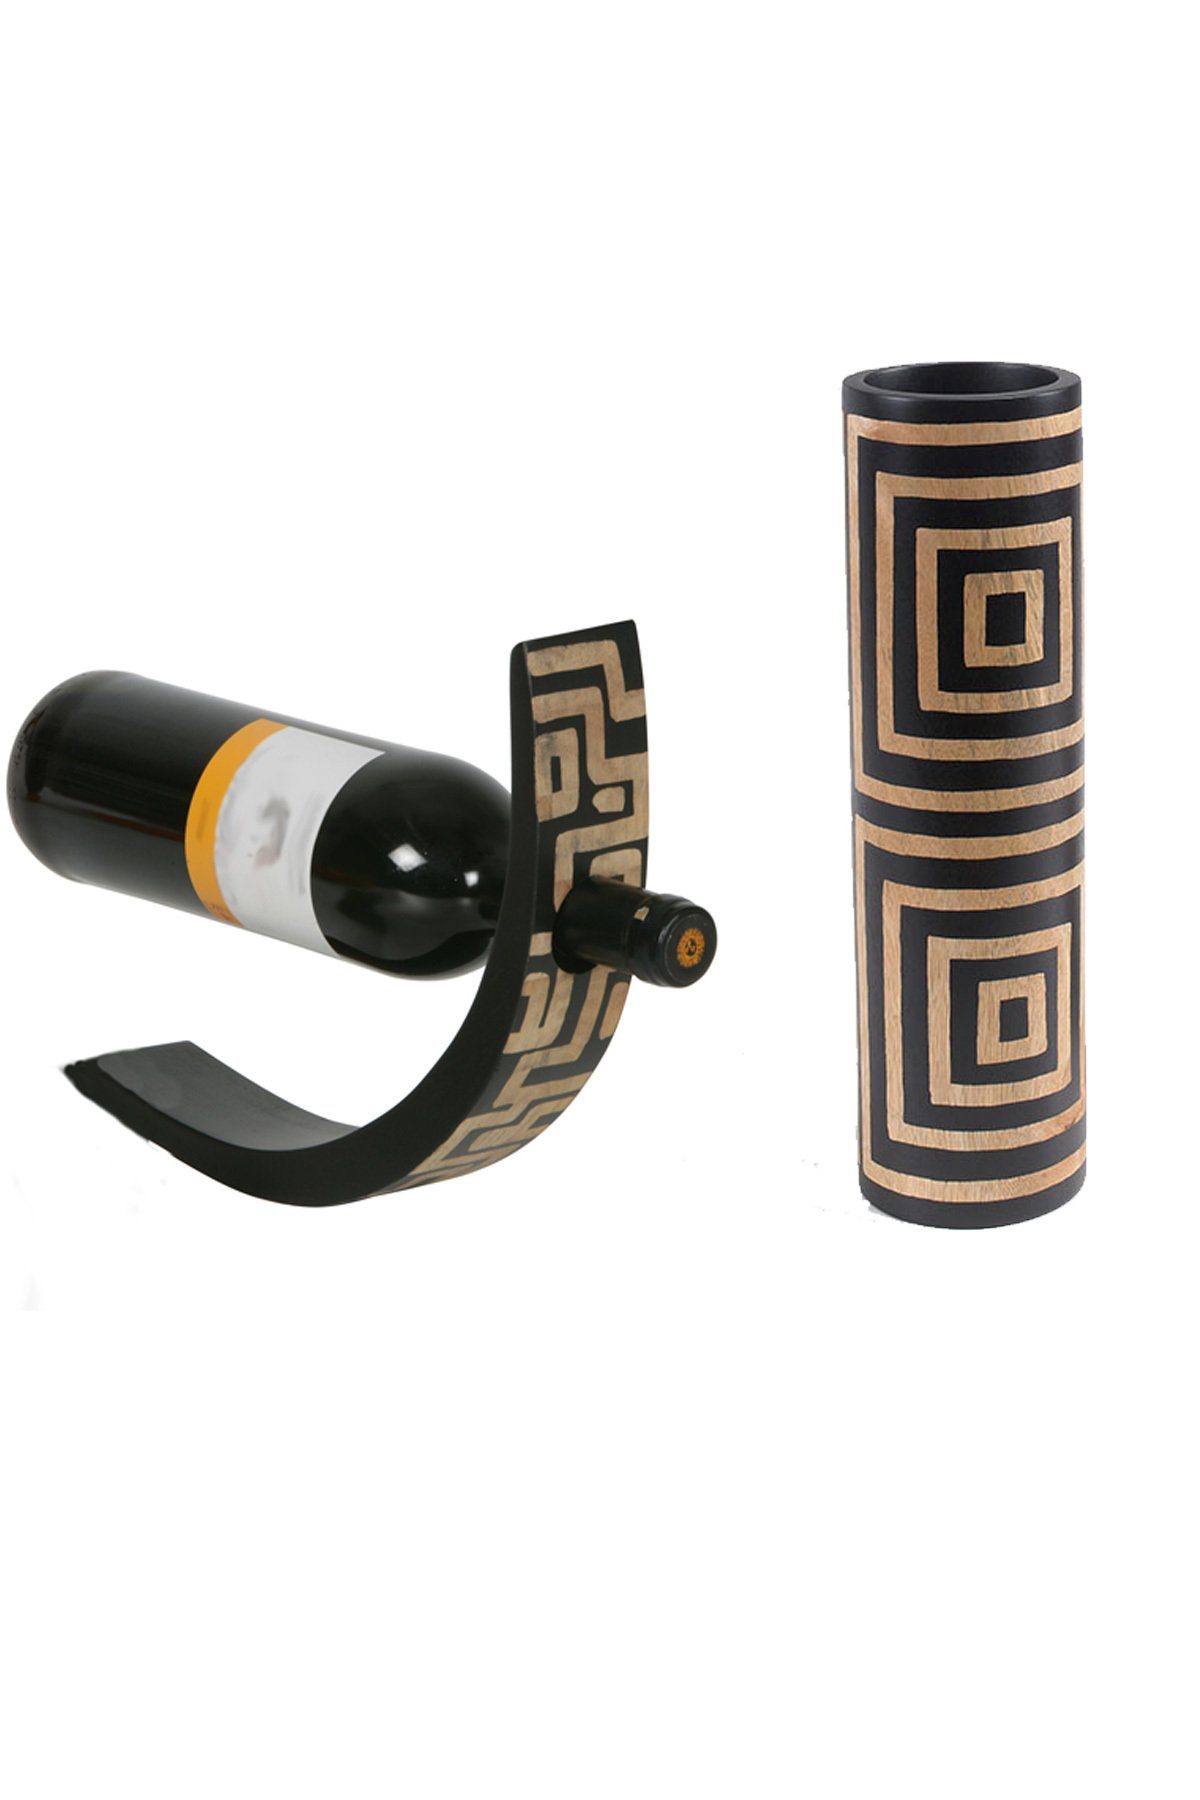 Holz Tischvase ARTRA & Designvase, schwarz Deko, Mangoholz " " St), Afrika Dekoration, Dekovase, Flaschenhalter Quadrate Vase Set (0 braun Holzvase,